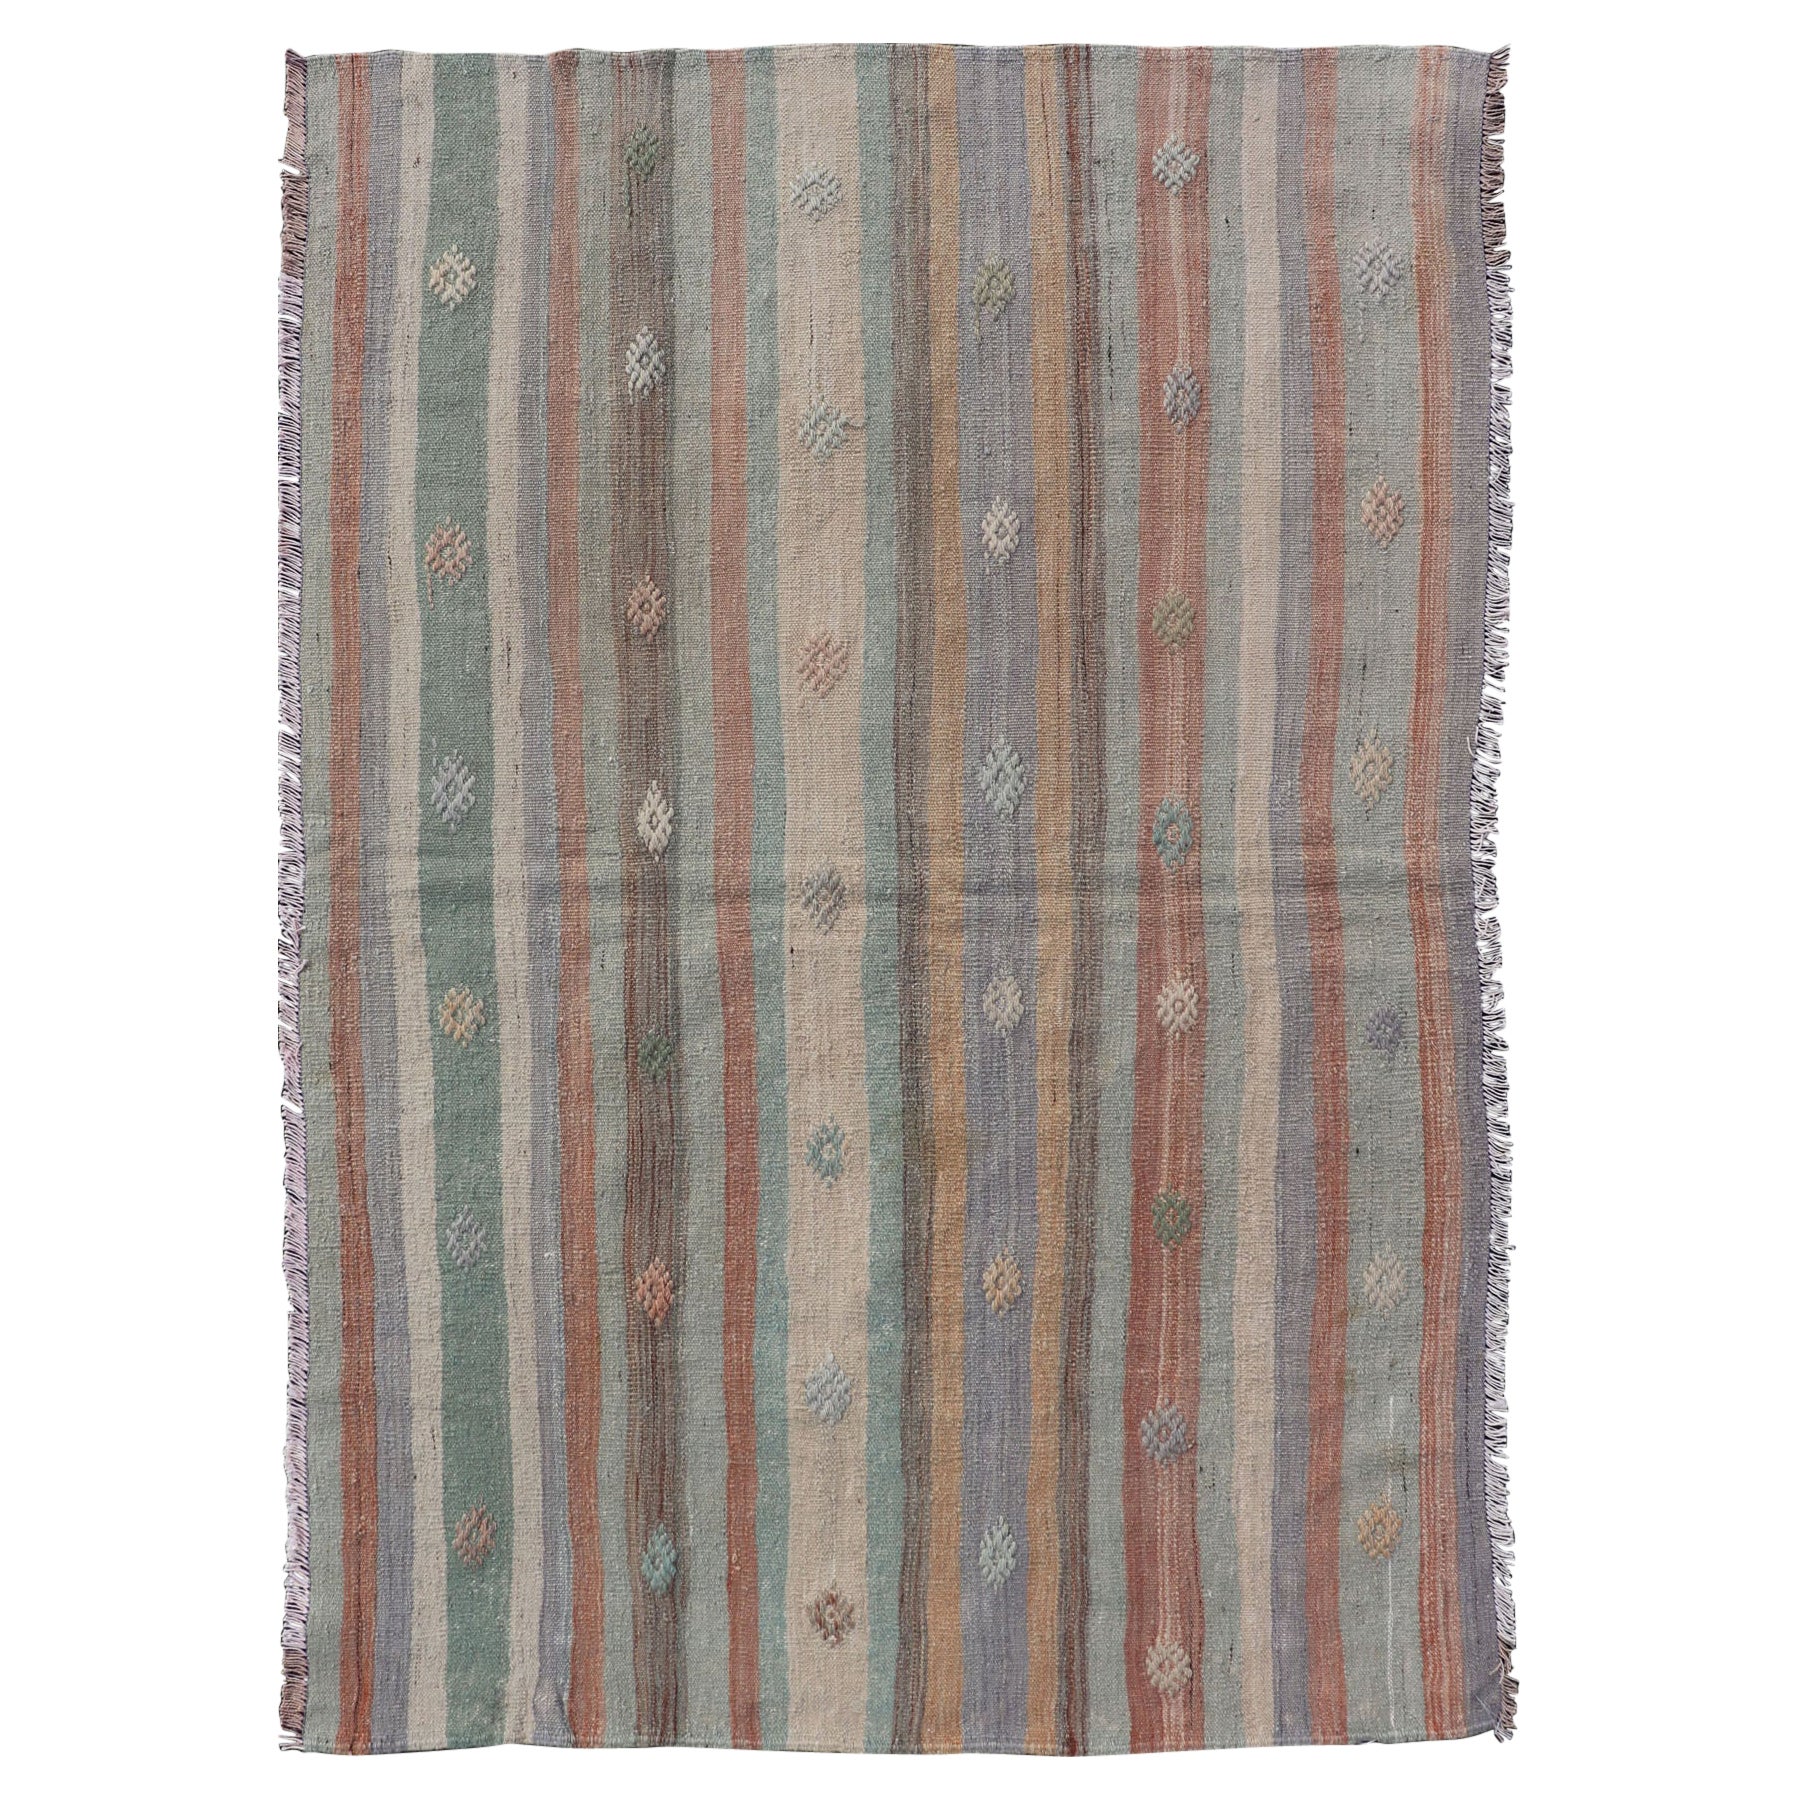 Colorful Vintage Turkish Flat-Weave Kilim Rug with Geometric Striped Design